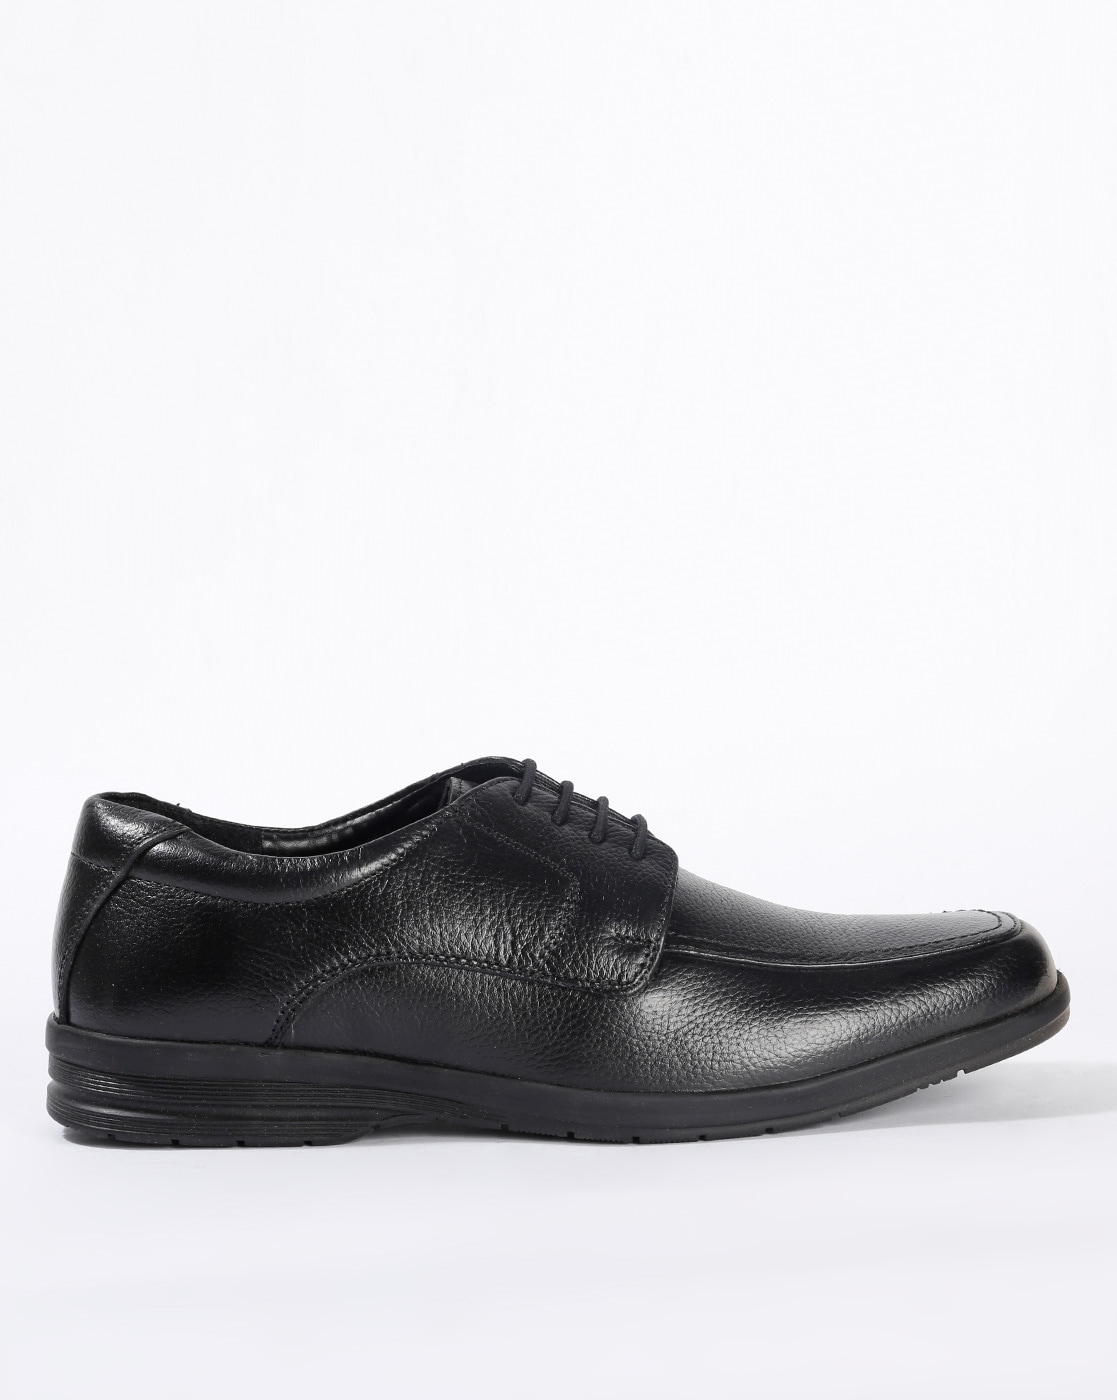 bata formal shoes